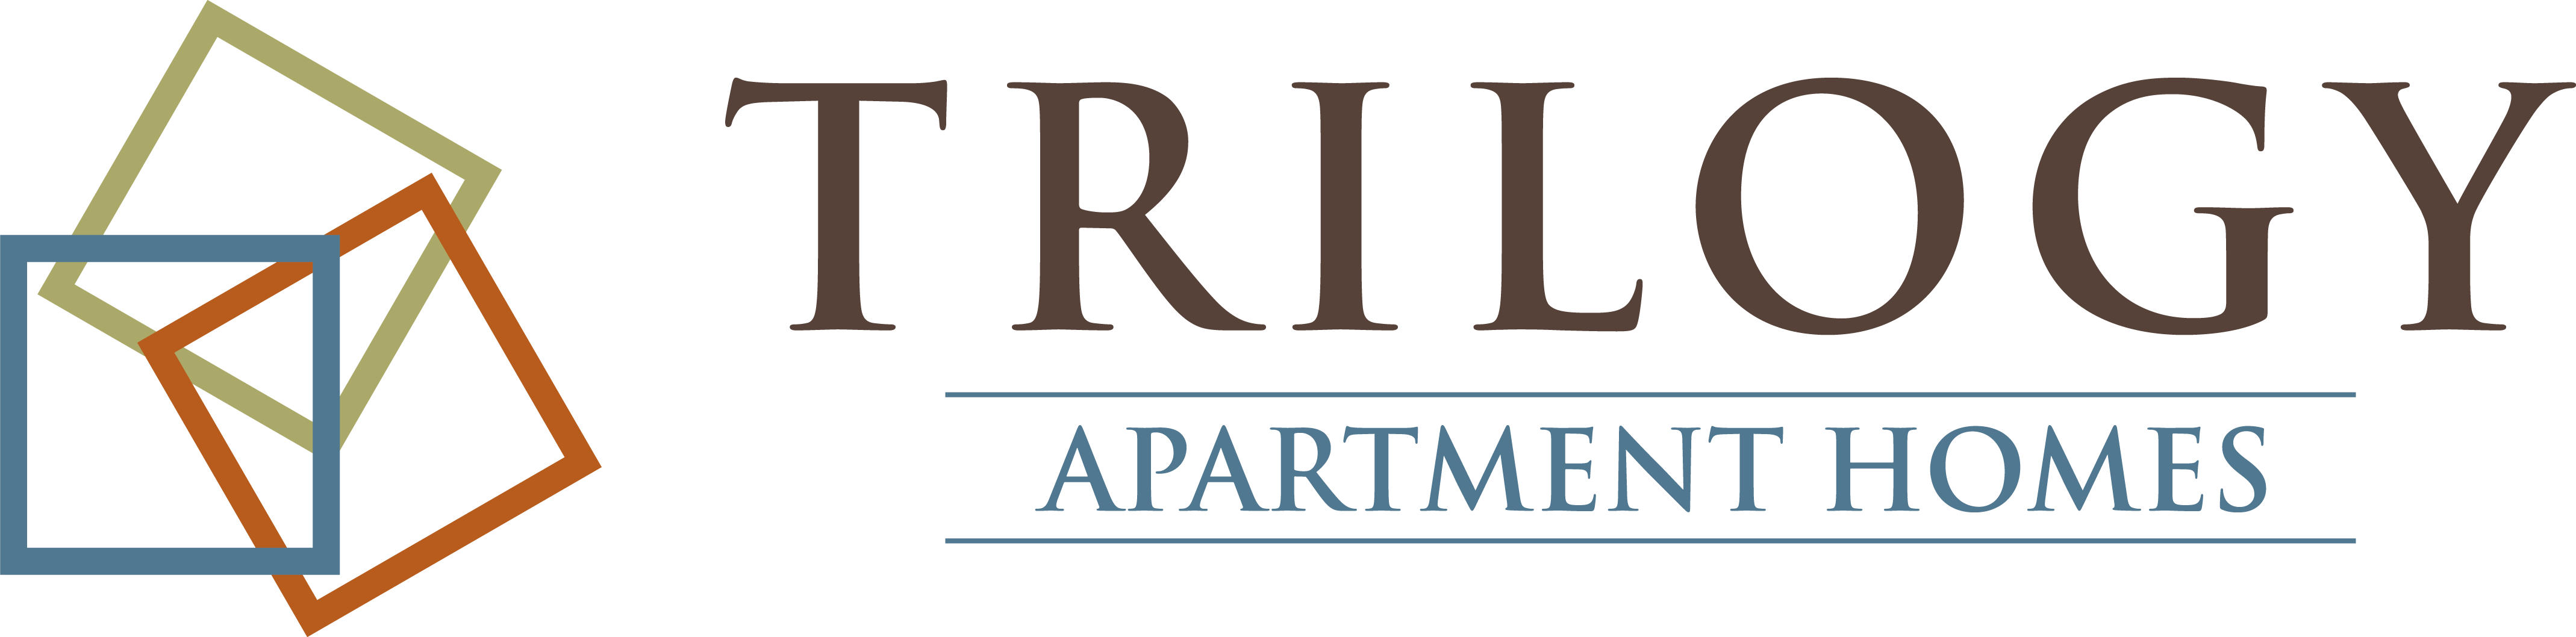 Trilogy East Apartments logo